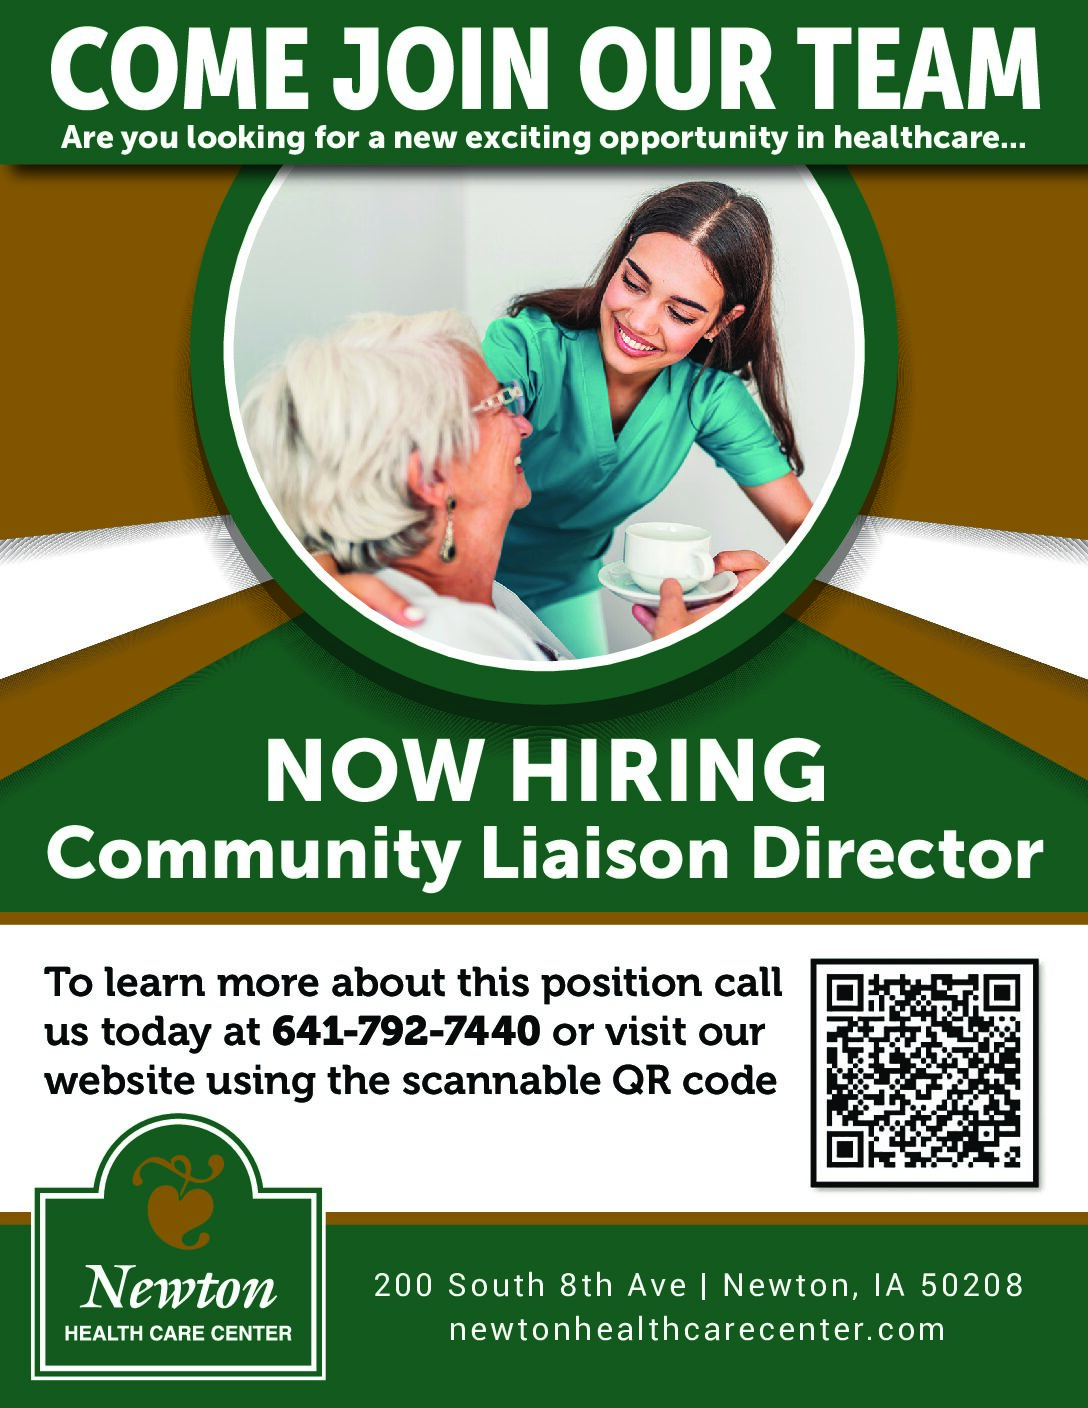 Newtone_Come Join Our Team AD_Community Liason Director_v1